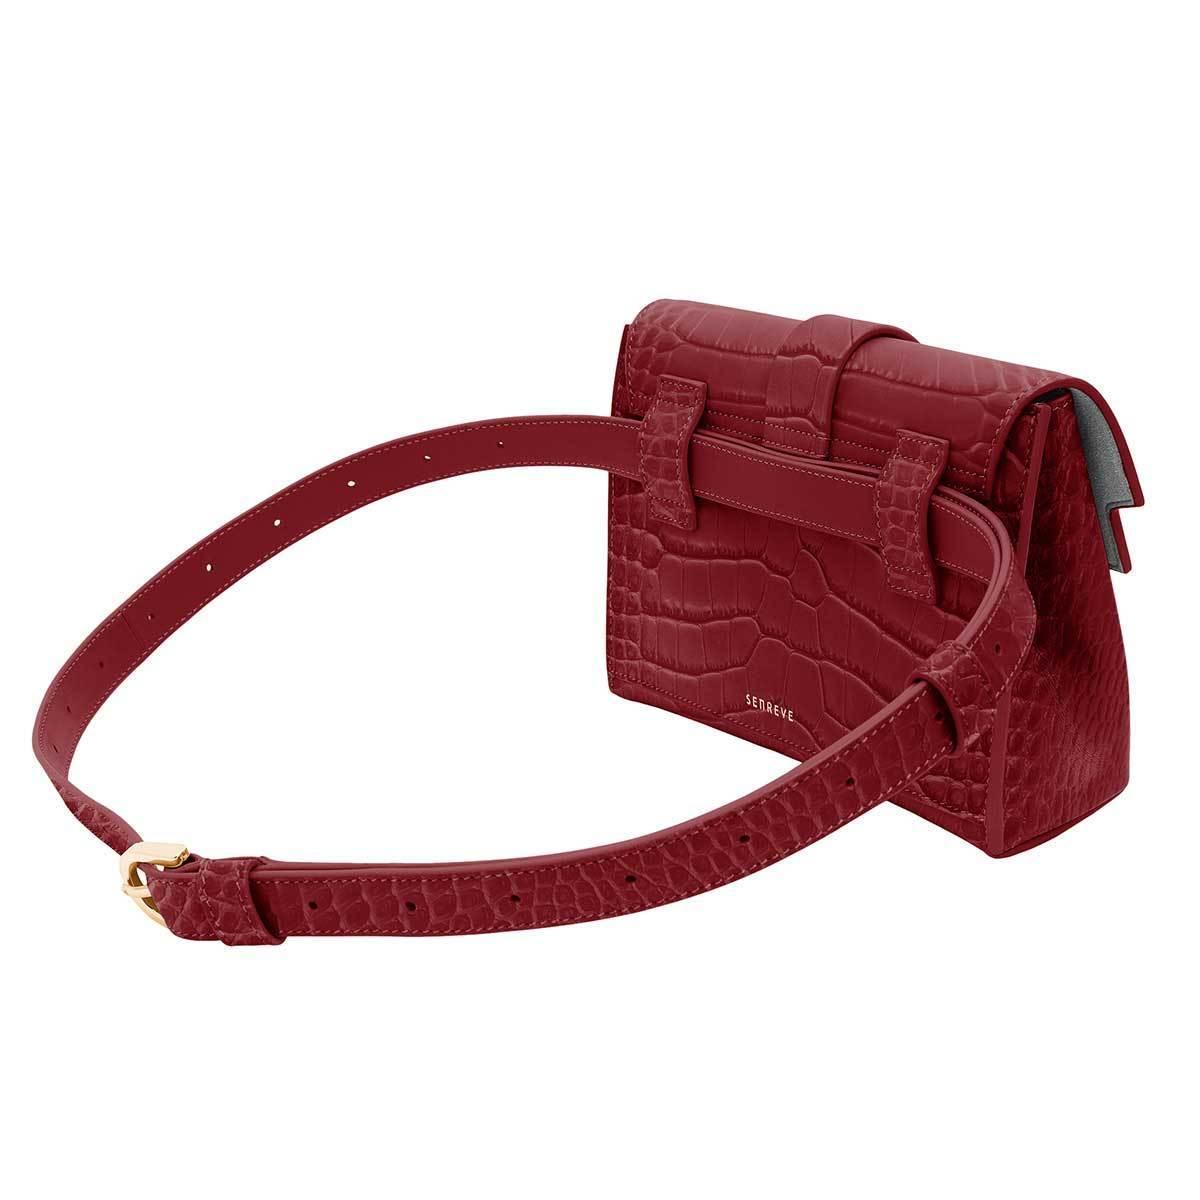 Senreve Leather Aria Belt Bag in Red - Lyst